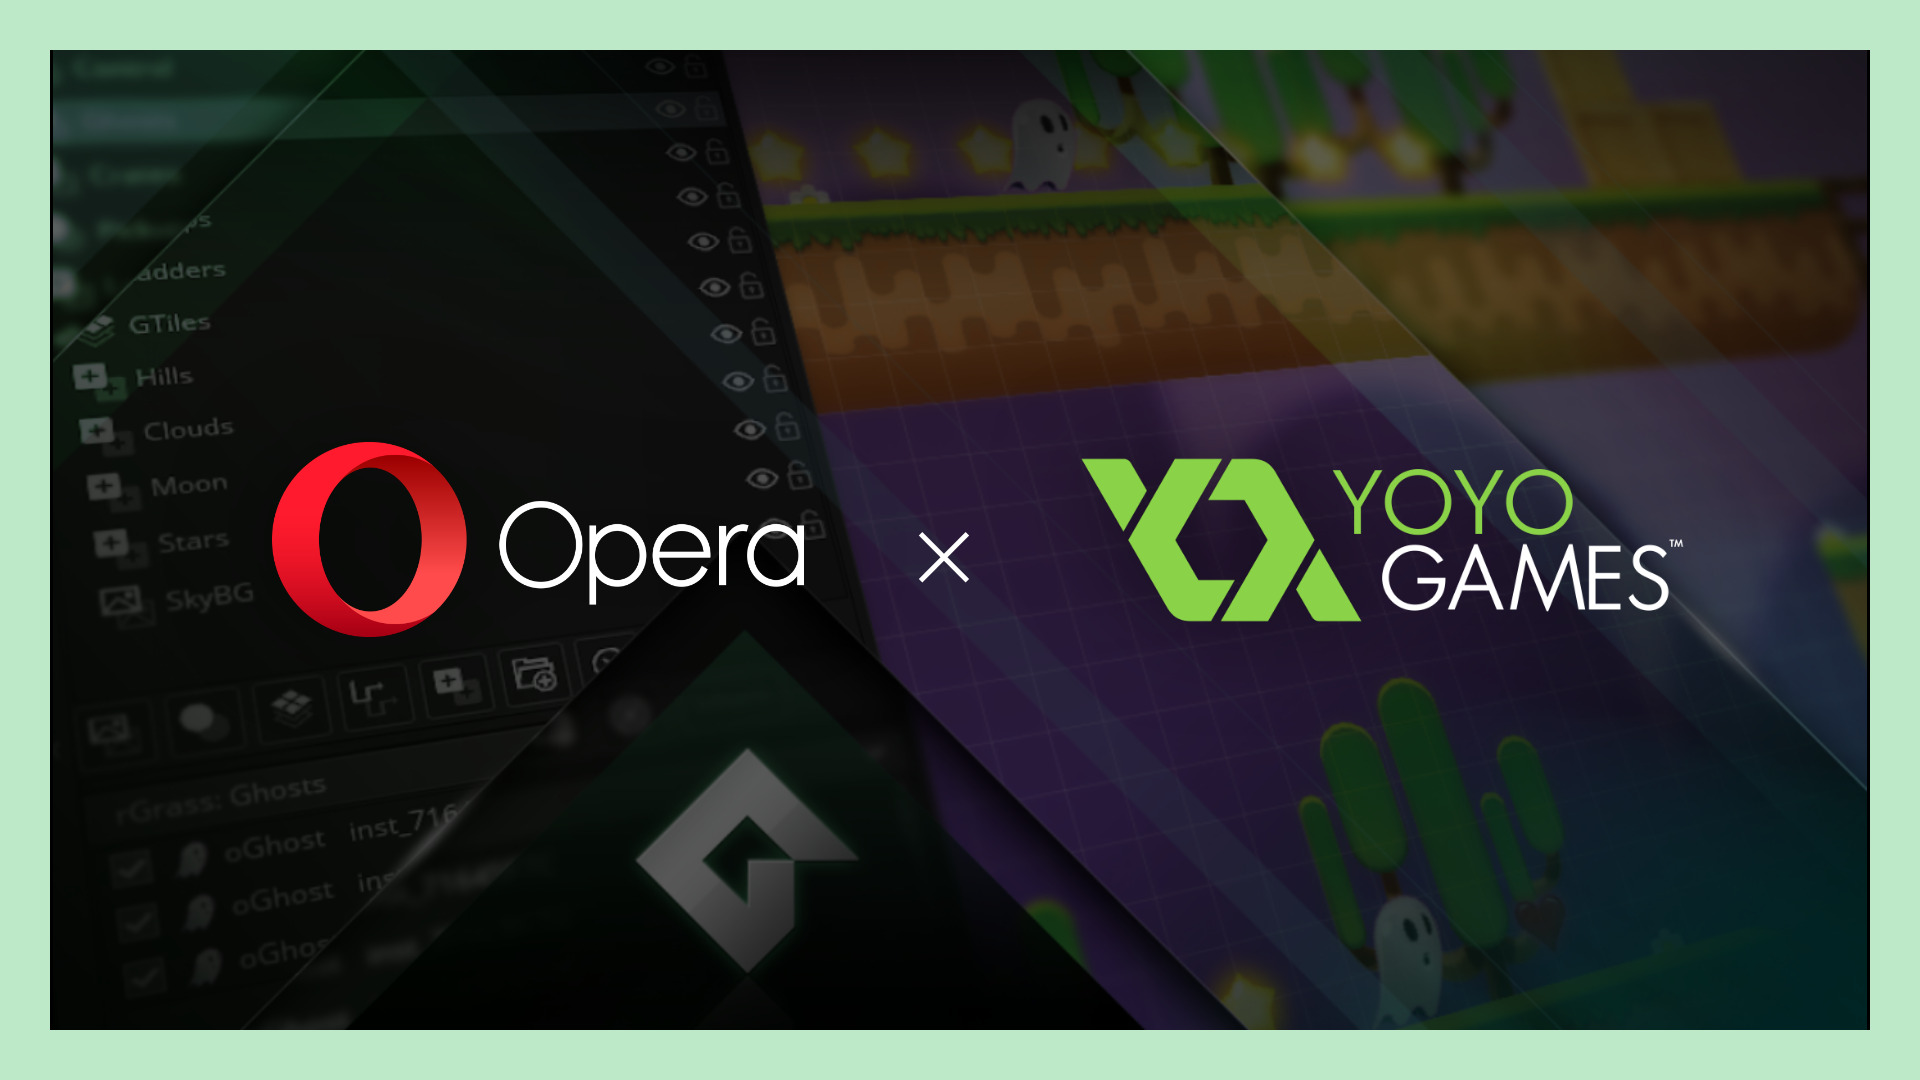 Yoyo Games joins Opera